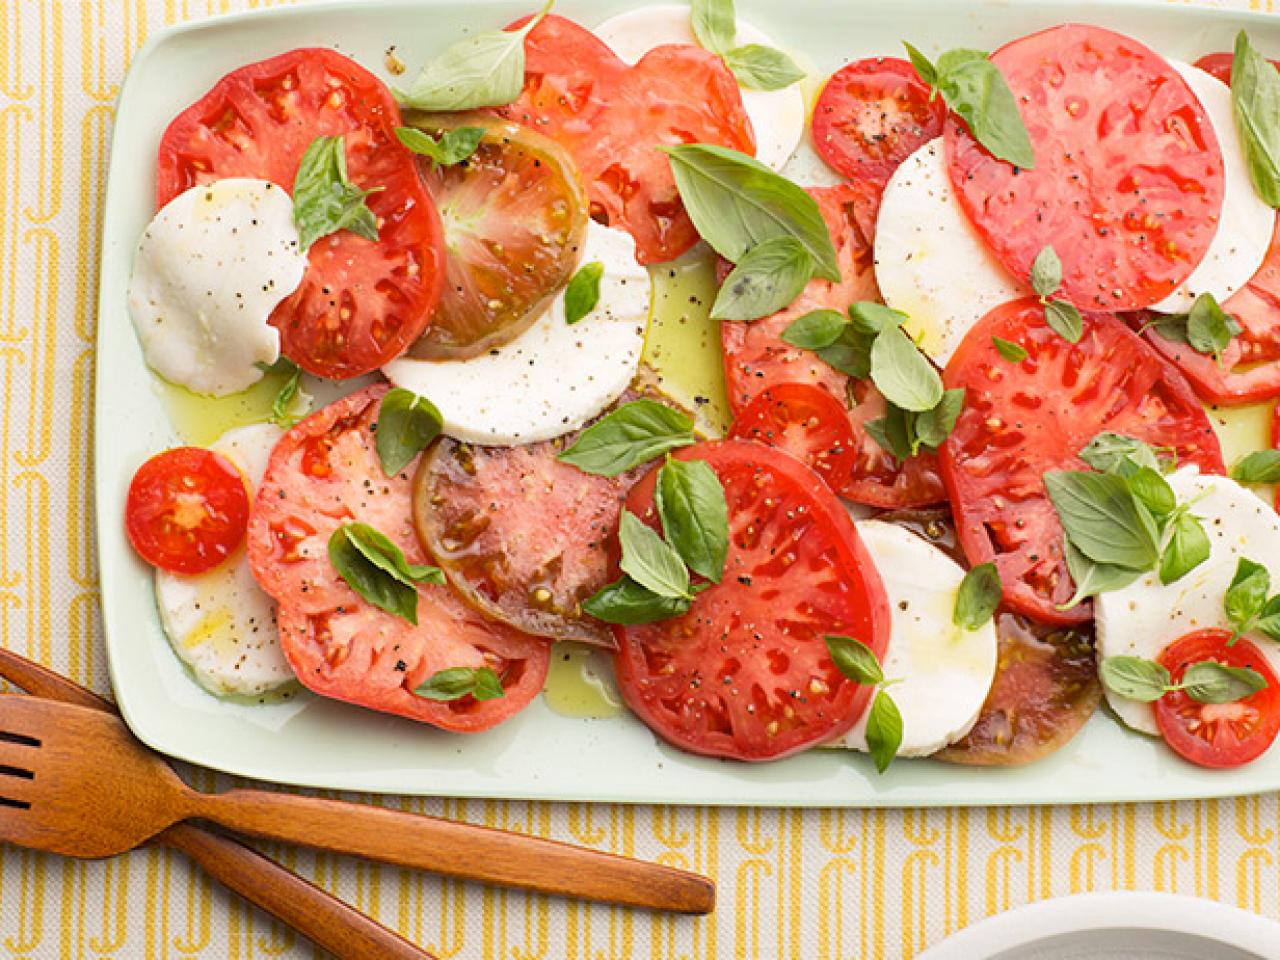 Savory Caprese Salad - Italian Tomato and Mozzarella